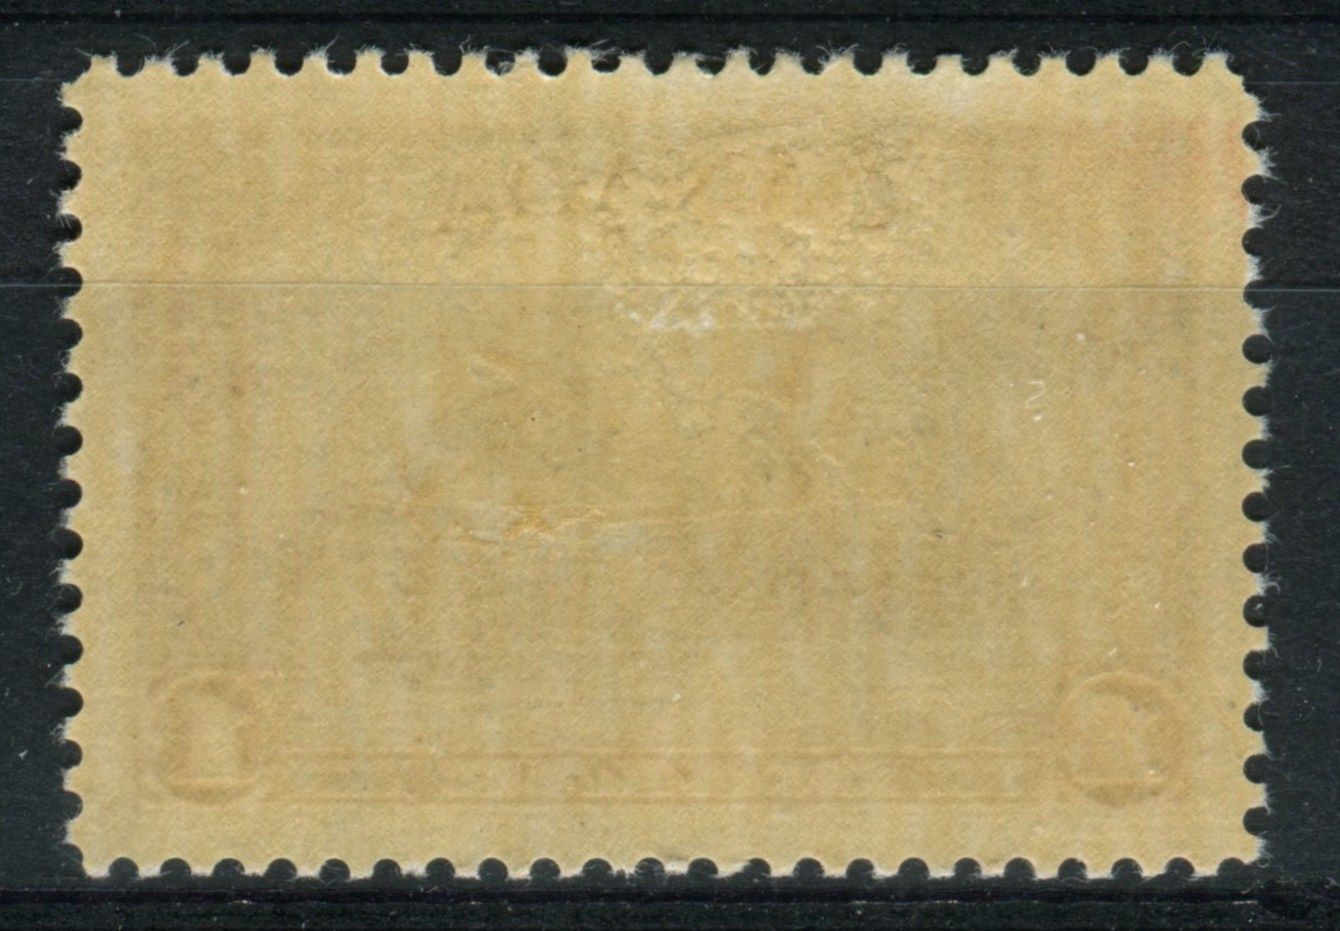 Canada #245 (SG#367) $1 Dull Violet Chateau de Ramezay 1938-42 Mufti Issue SUP-96 LH Brixton Chrome 